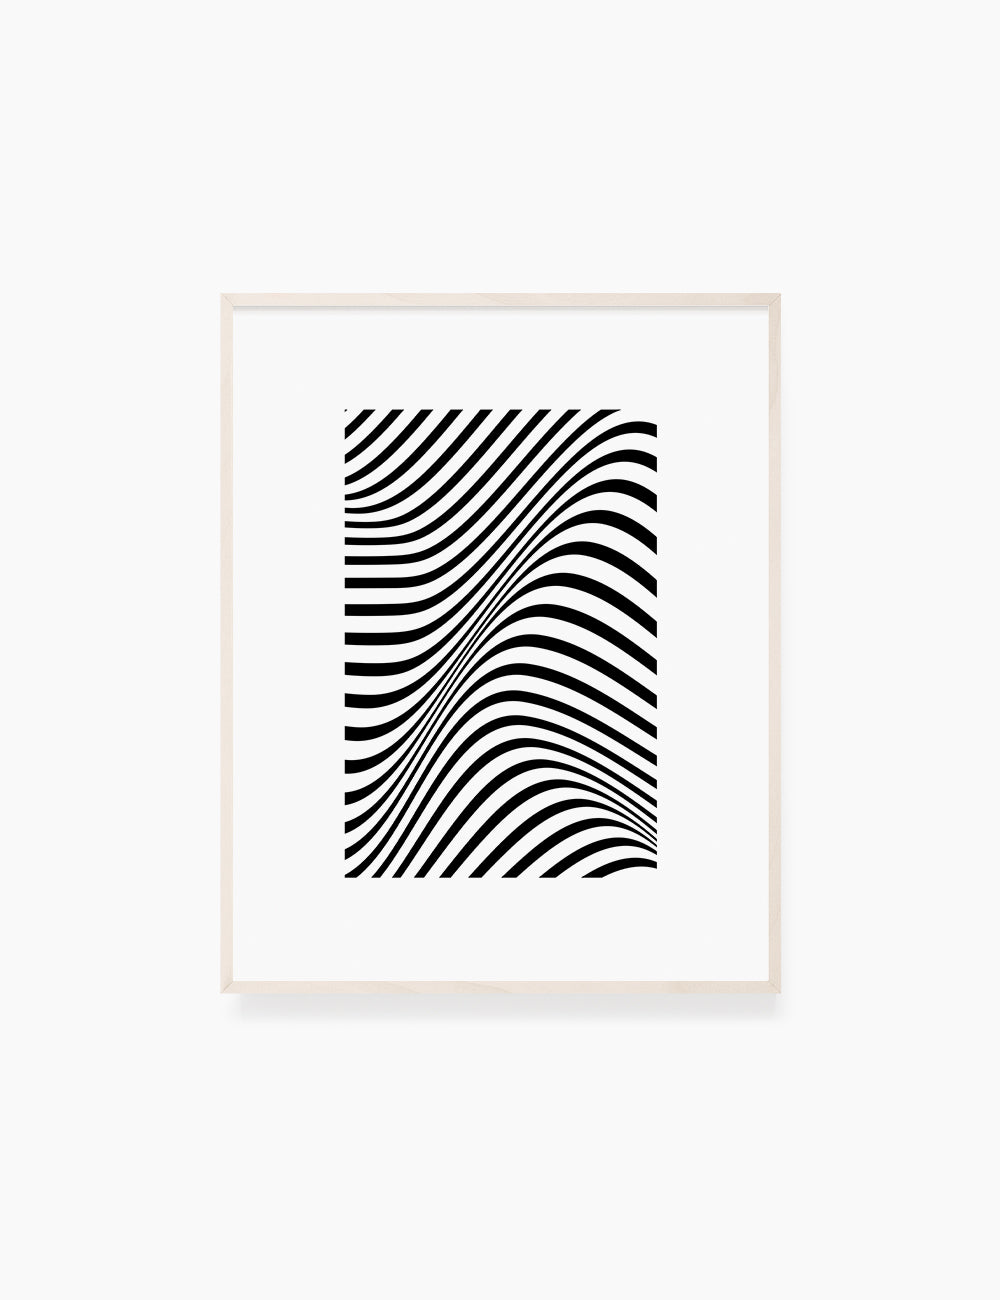 PRINTABLE WALL ART ILLUSTRATION: Minimalist Black and White Abstract Waves. Stylish. Modern. Wavy.